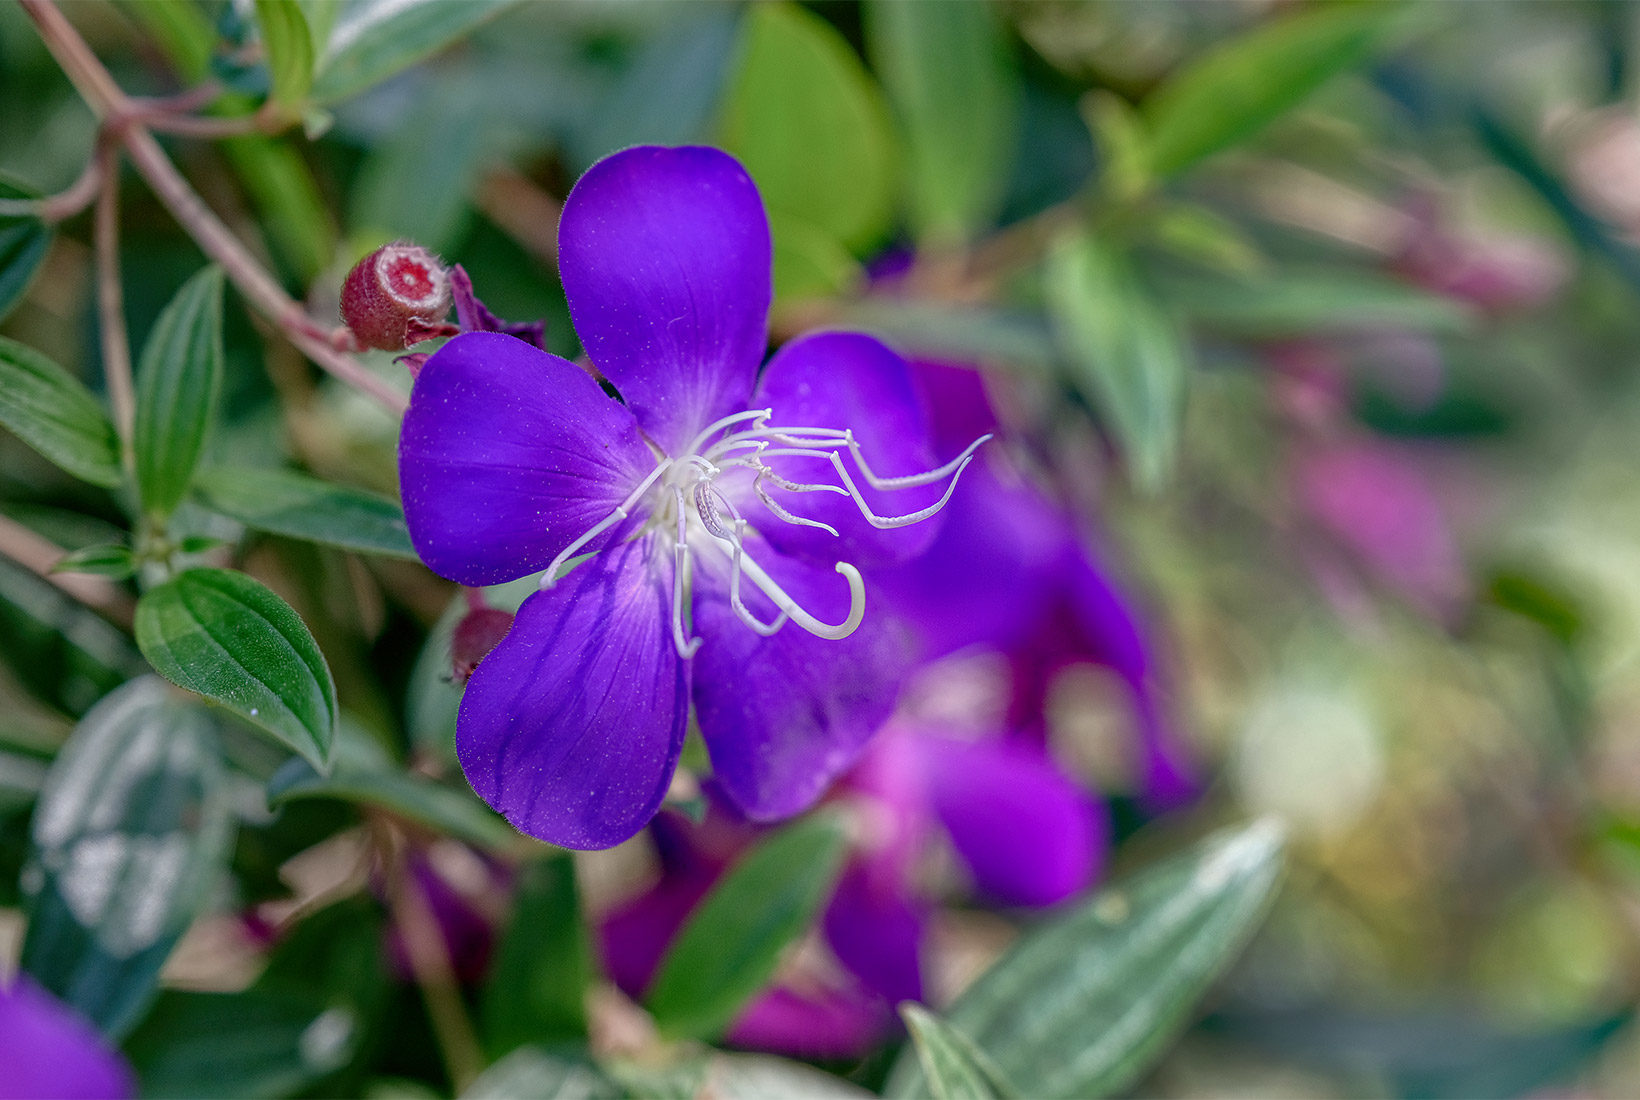 Royal purple flowers at Princess Sirindhorn Palace in Doi Inthanon National Park, Thailand